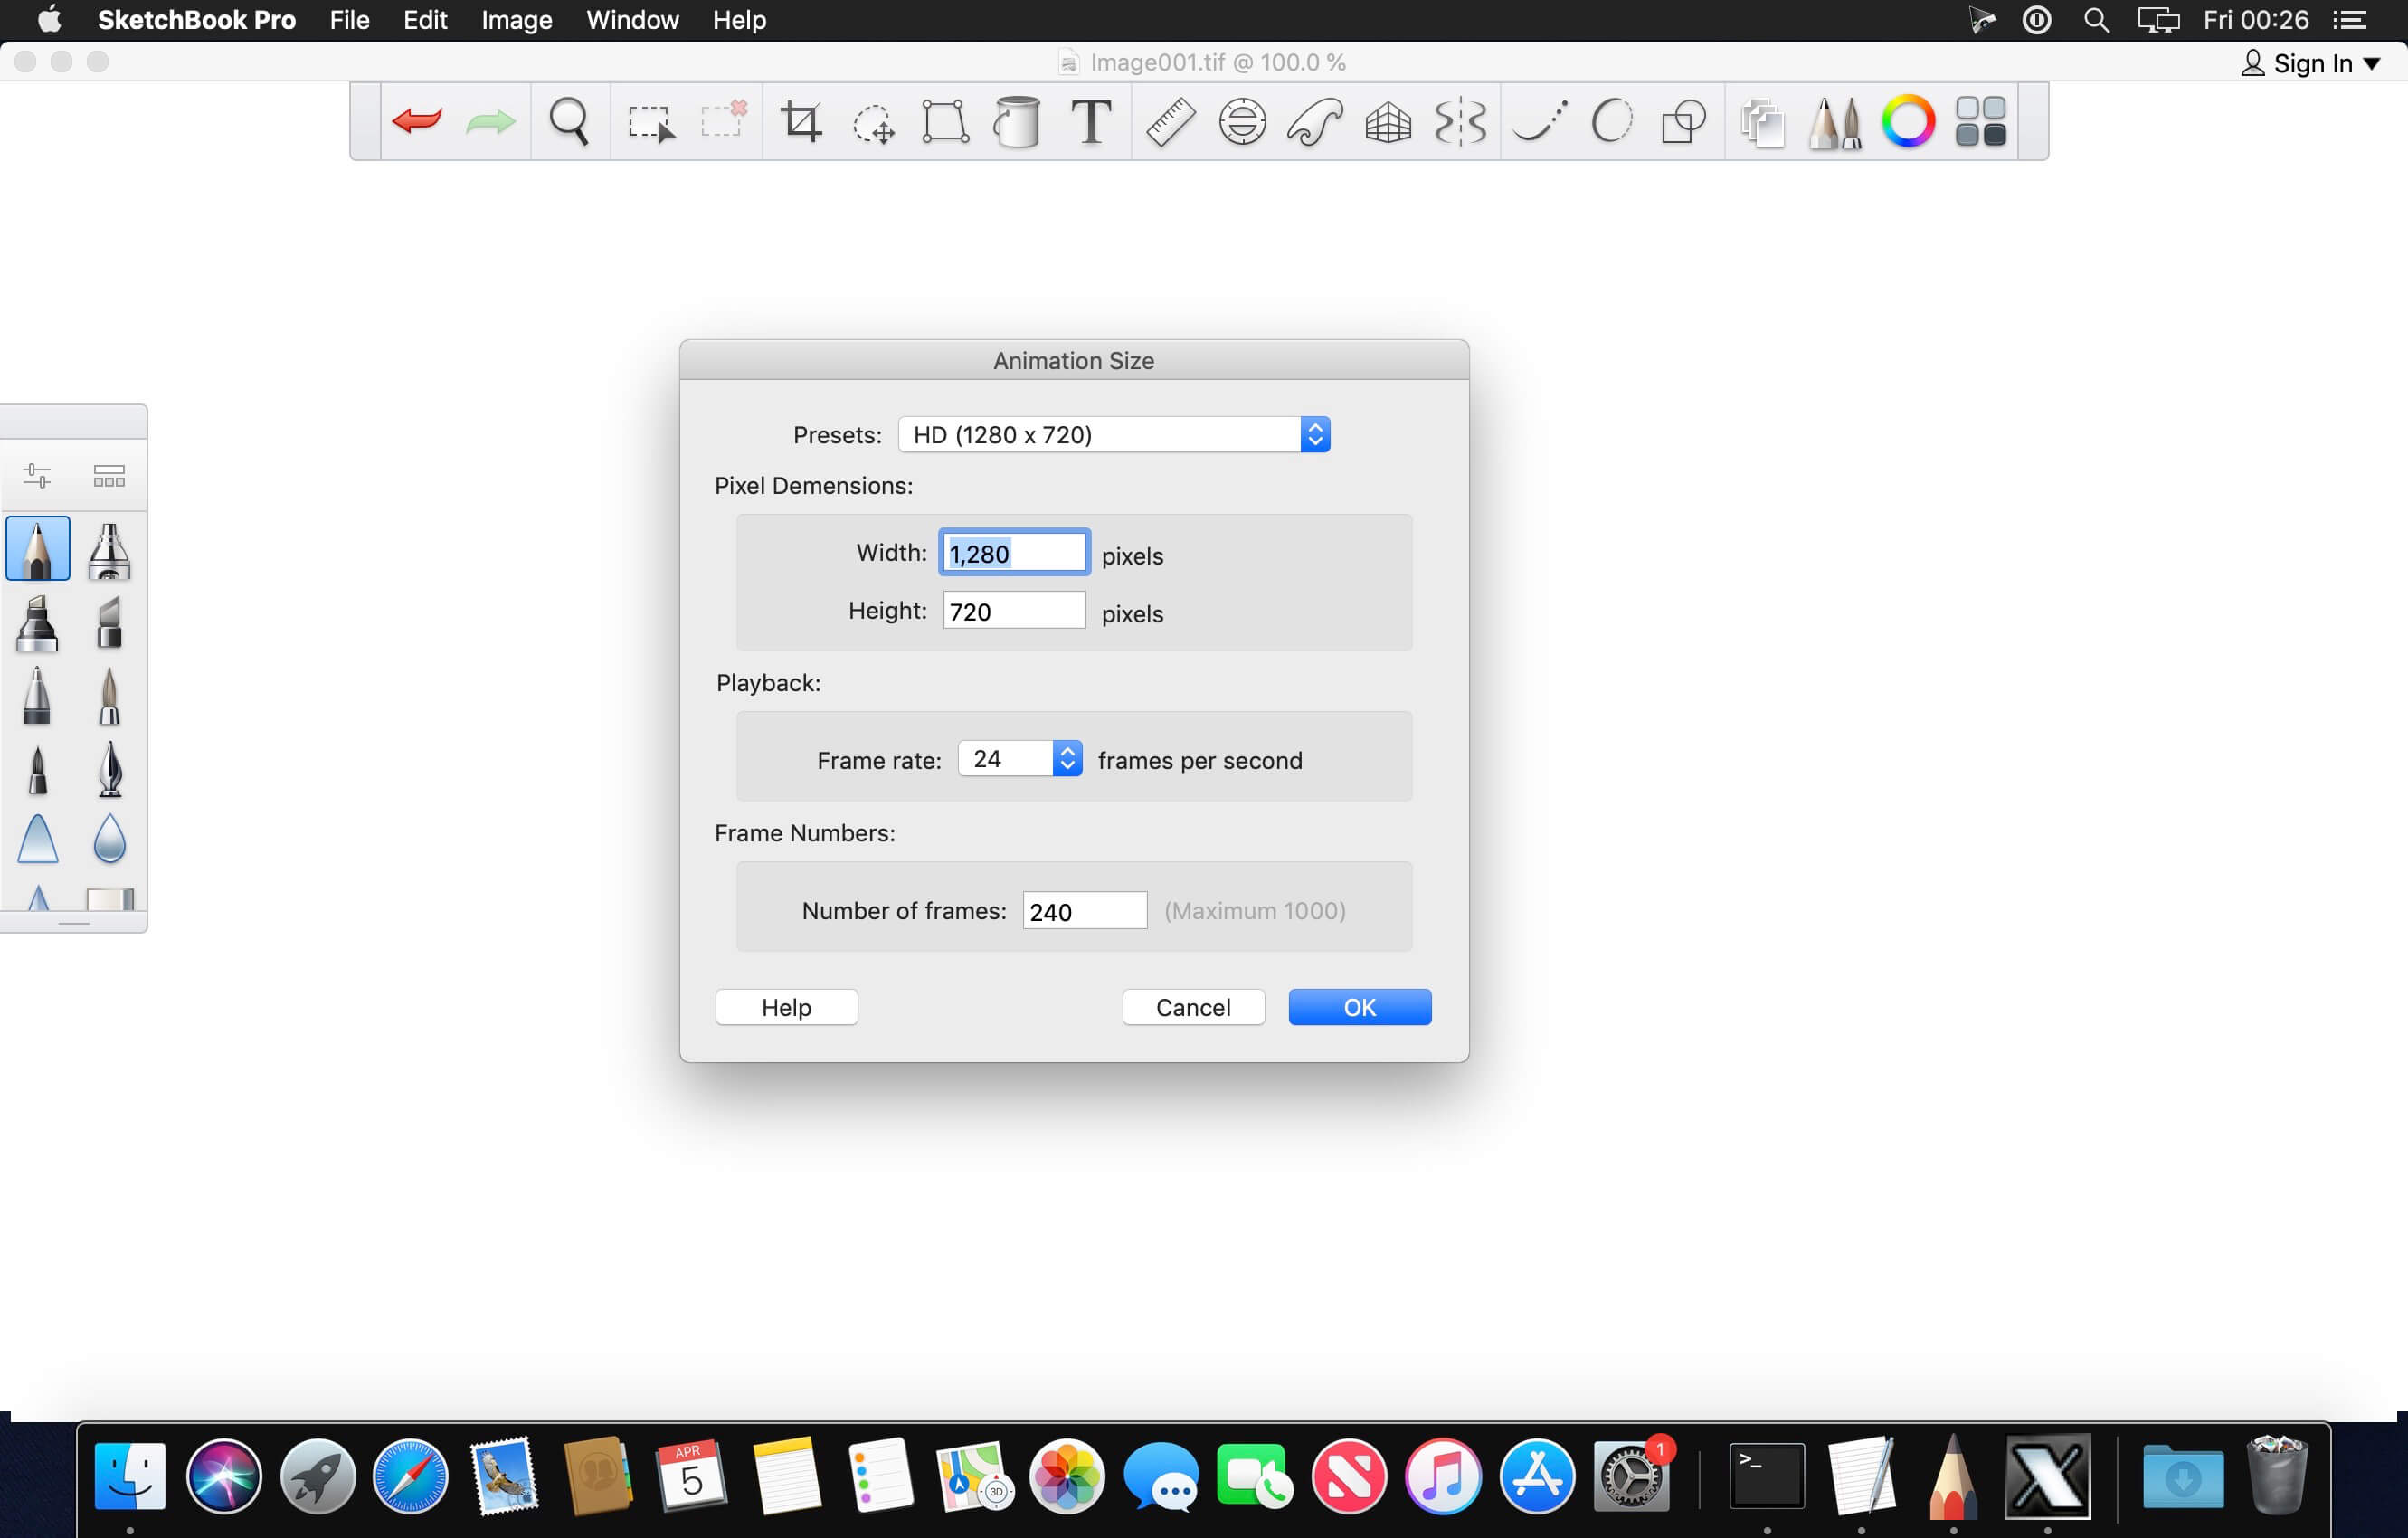 autodesk sketchbook pro 2015 for enterprise mac